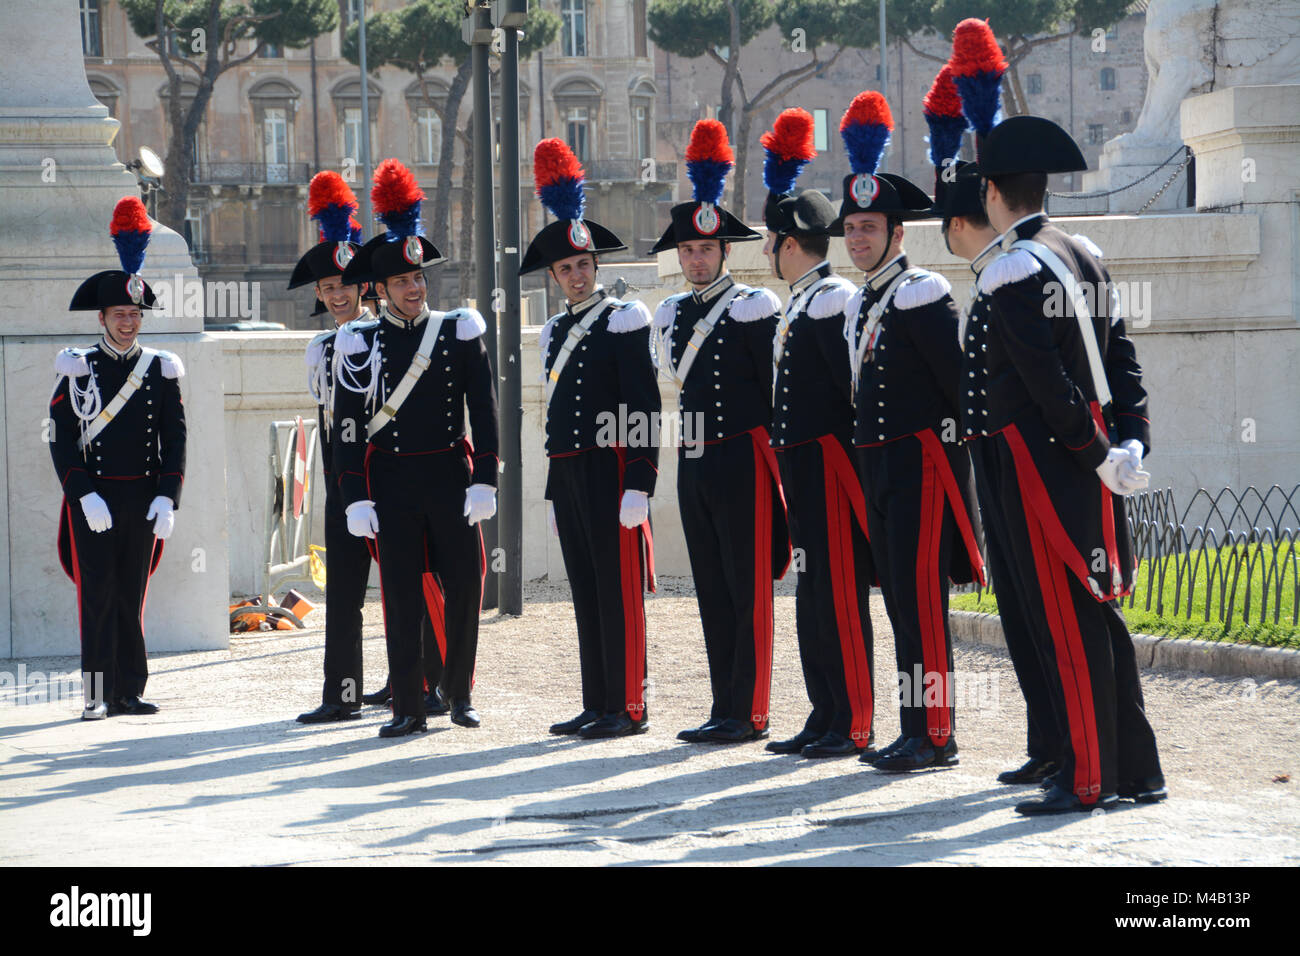 Rom / Italien – 25. April 2014: Junge Carabinieri-Studenten in voller Uniform bei den Feierlichkeiten zum 25. April, der nationalen Befreiung Italiens. Stockfoto